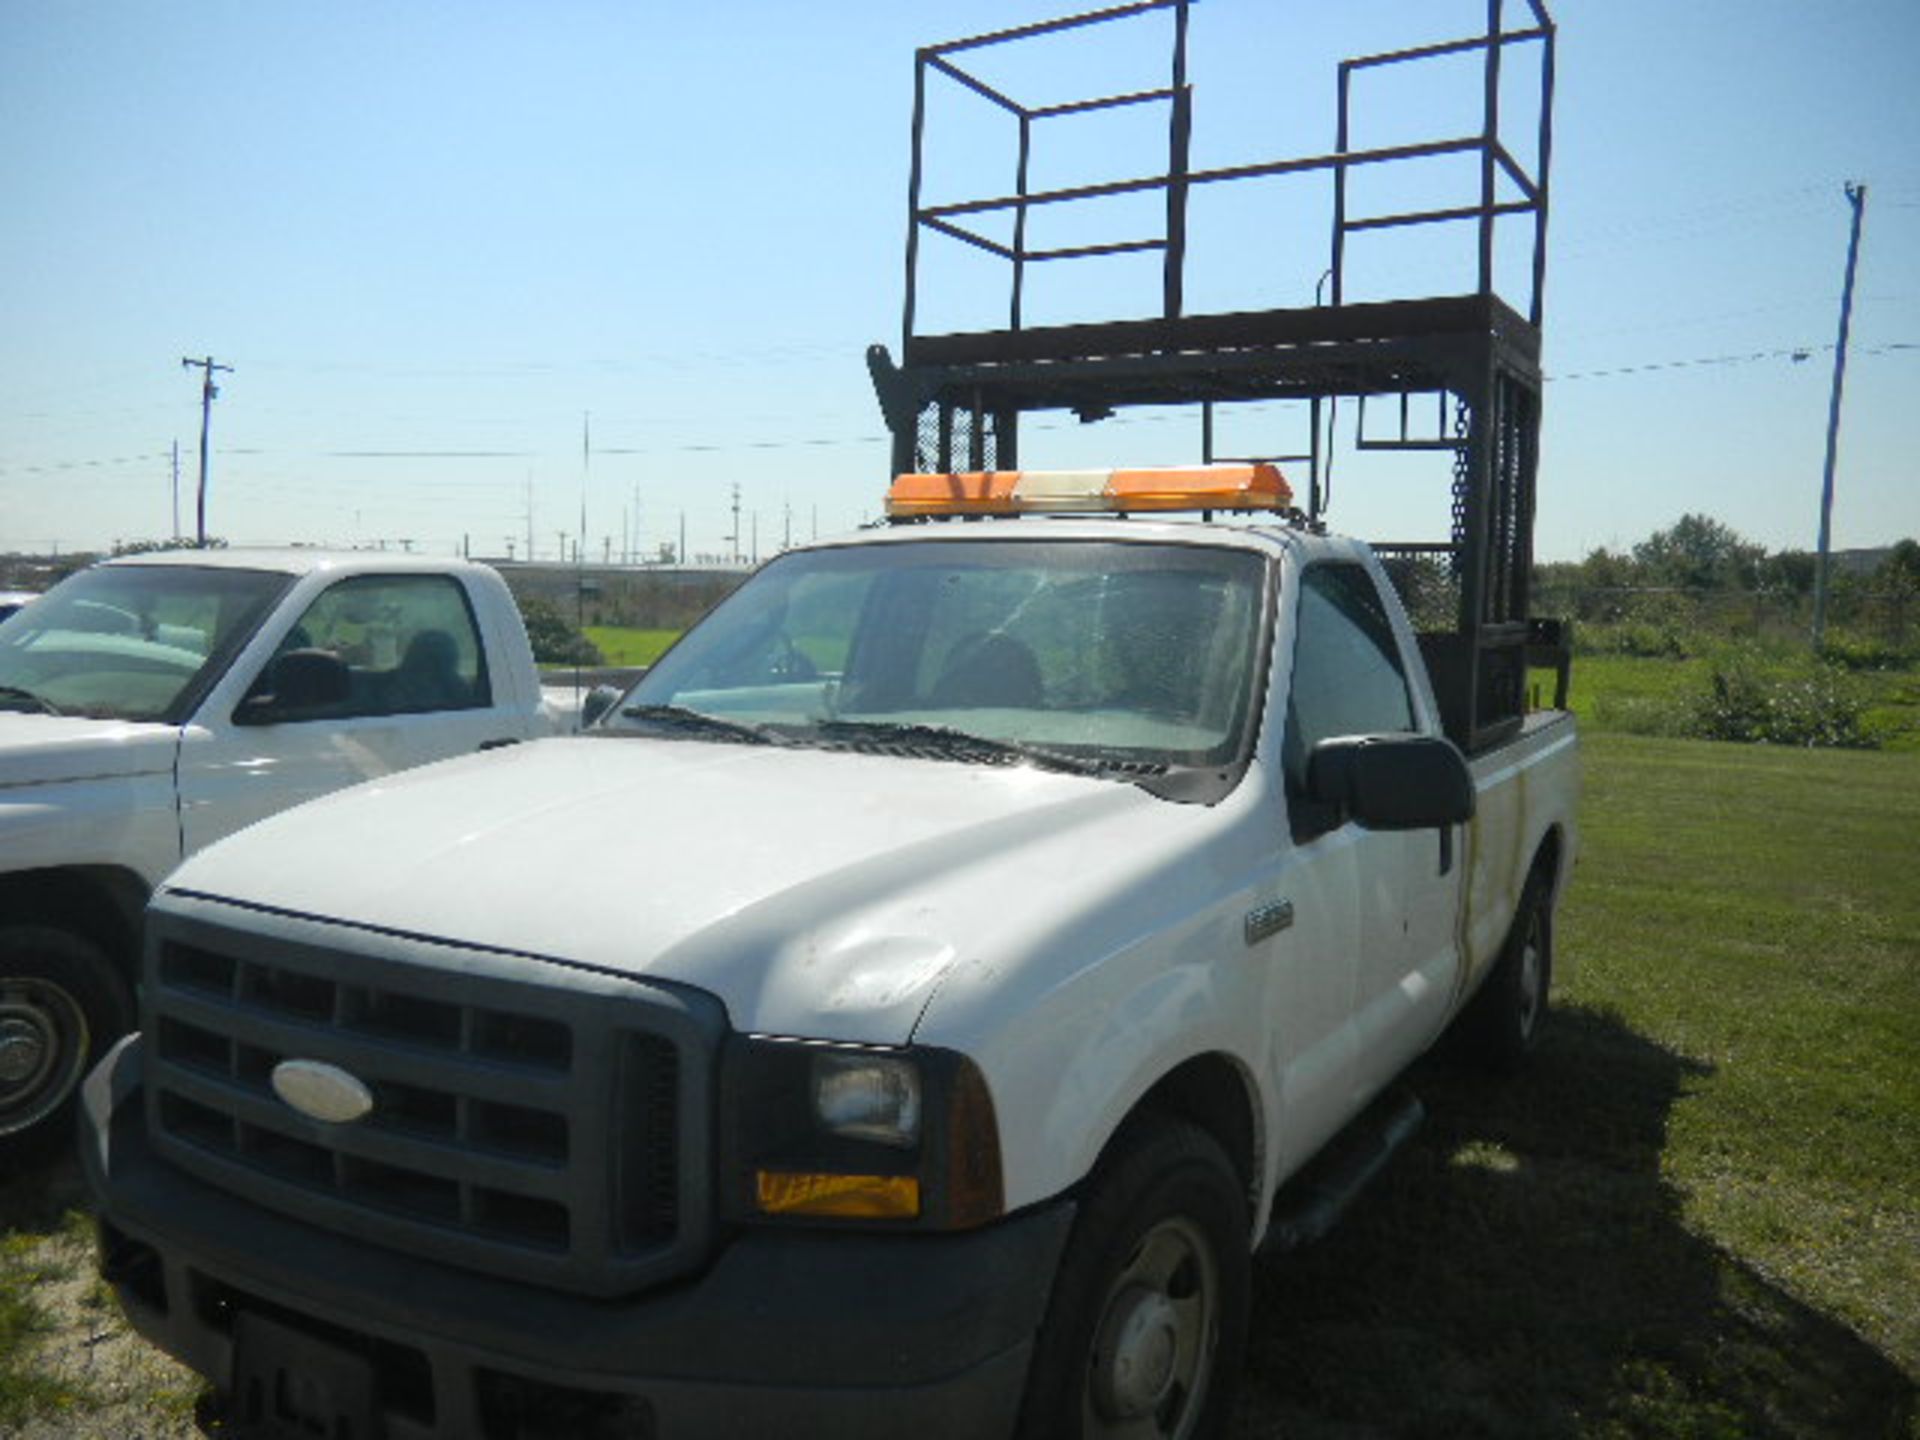 2006 Ford F250 "Sign Truck" With Metal Rack & Compressor - Asset I.D. #945 - Last of Vin (D90999) - Image 2 of 8